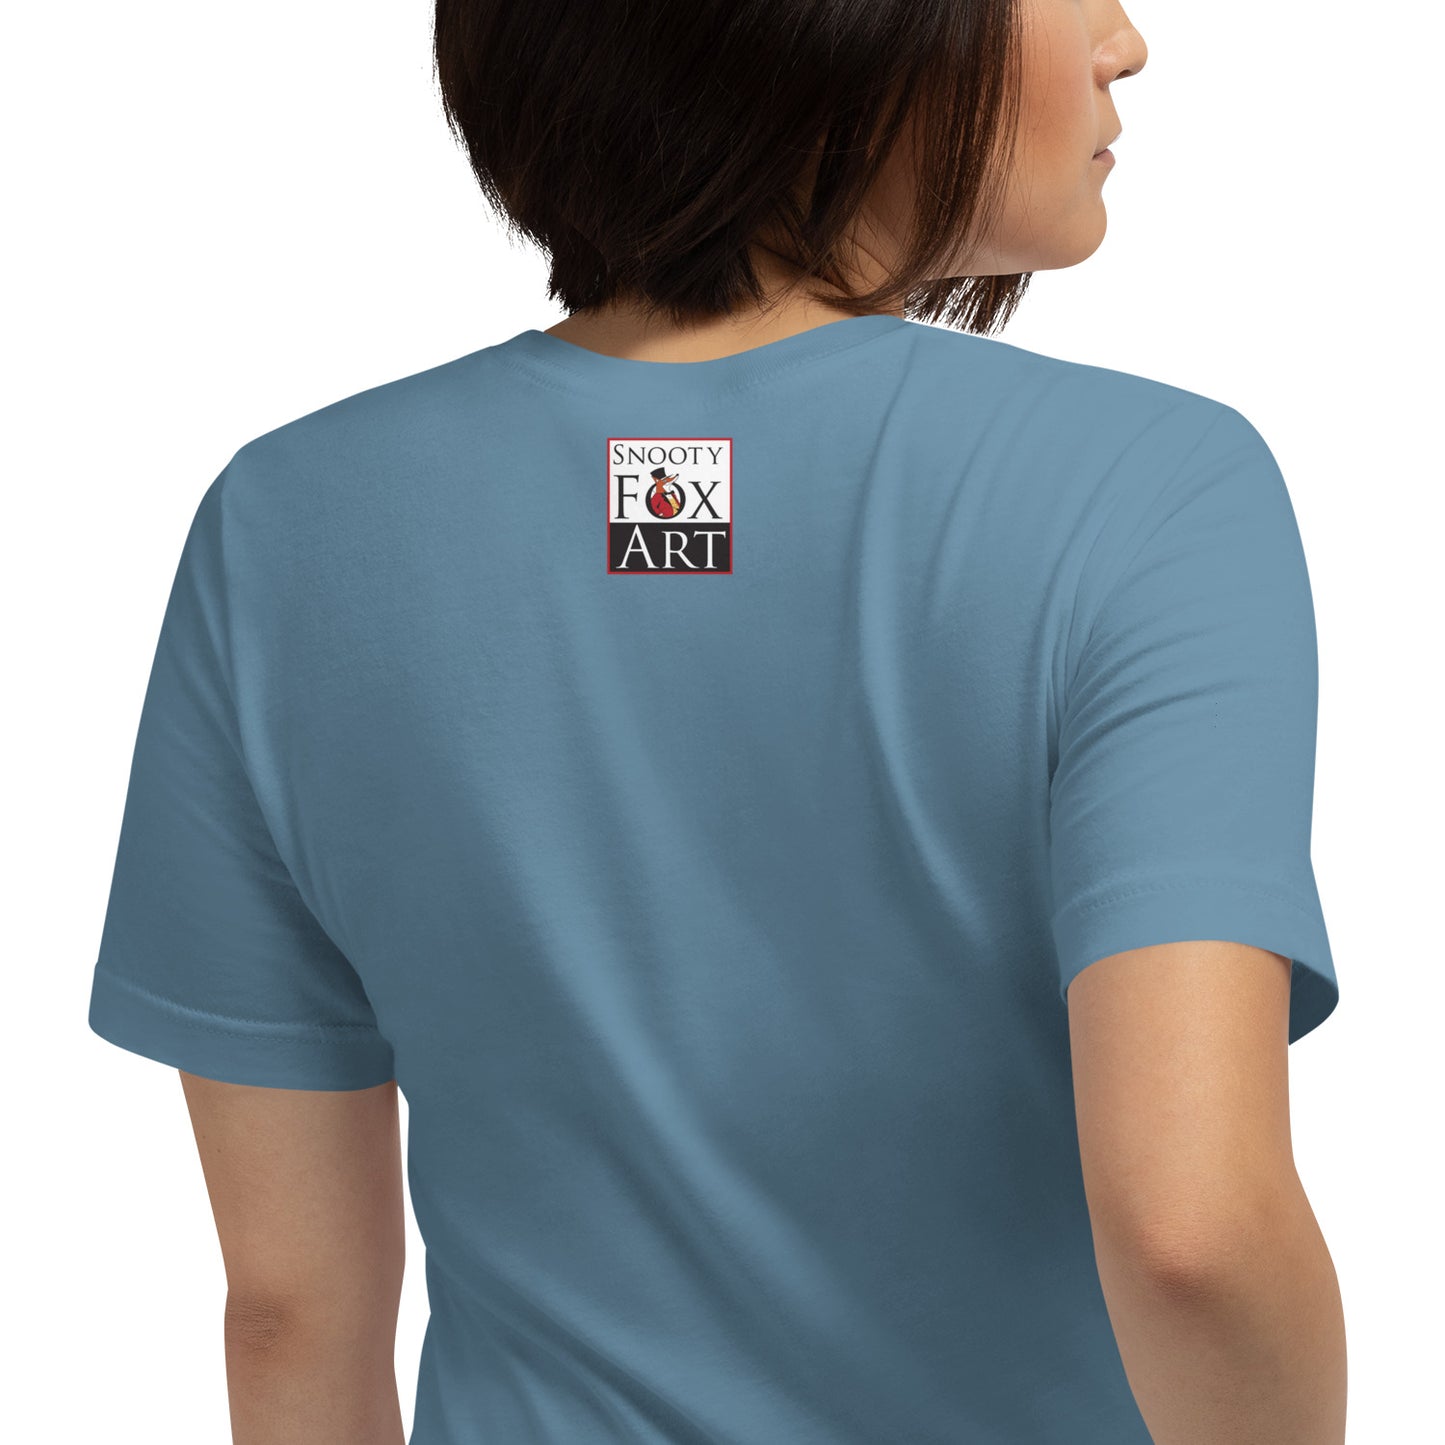 Snooty Fox Art Unisex T-Shirt - Make Yourself Great